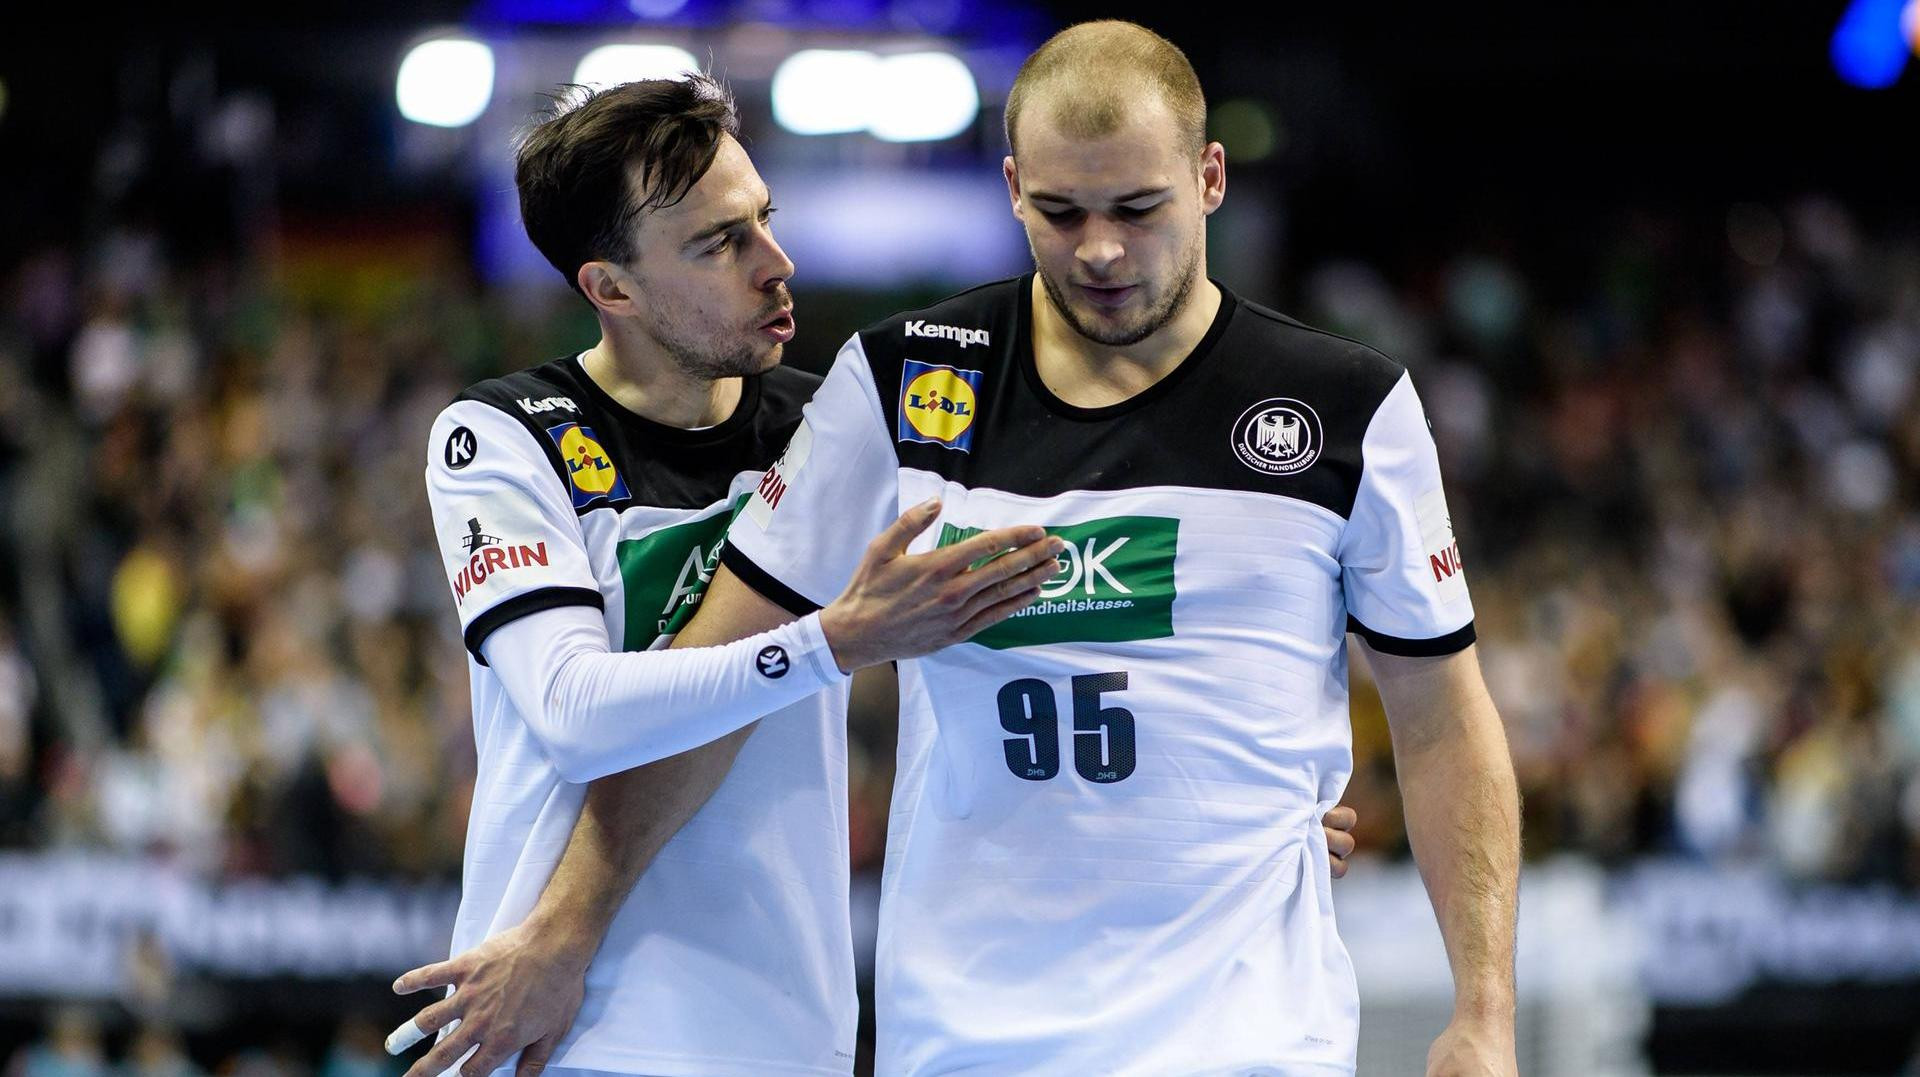 Handball Wm Tabelle
 Handball WM 2019 Deutschland ärgert sich über "verlorenen